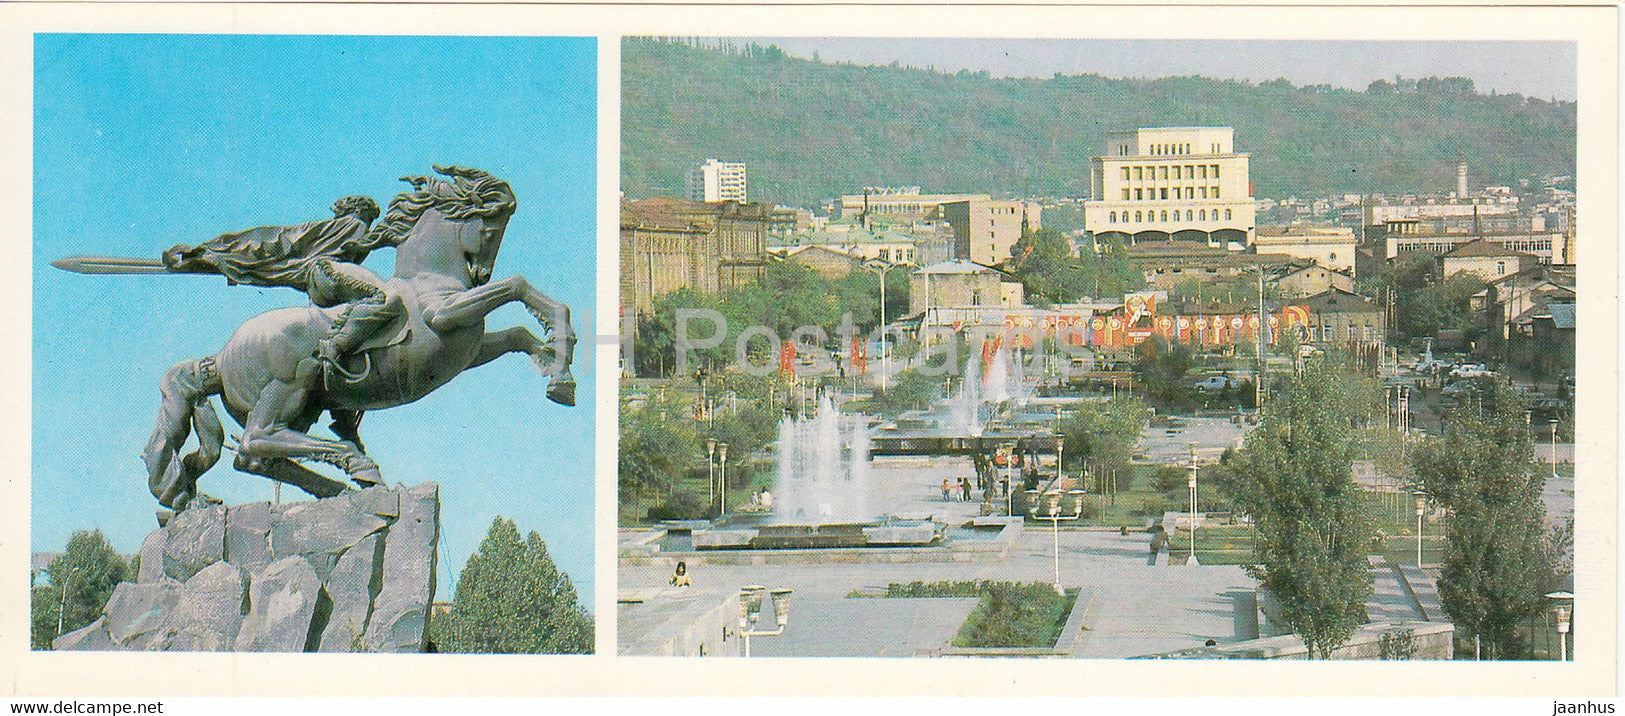 Yerevan - monument to David of Sasun - horse - main prospekt - 1981 - Armenia USSR - unused - JH Postcards